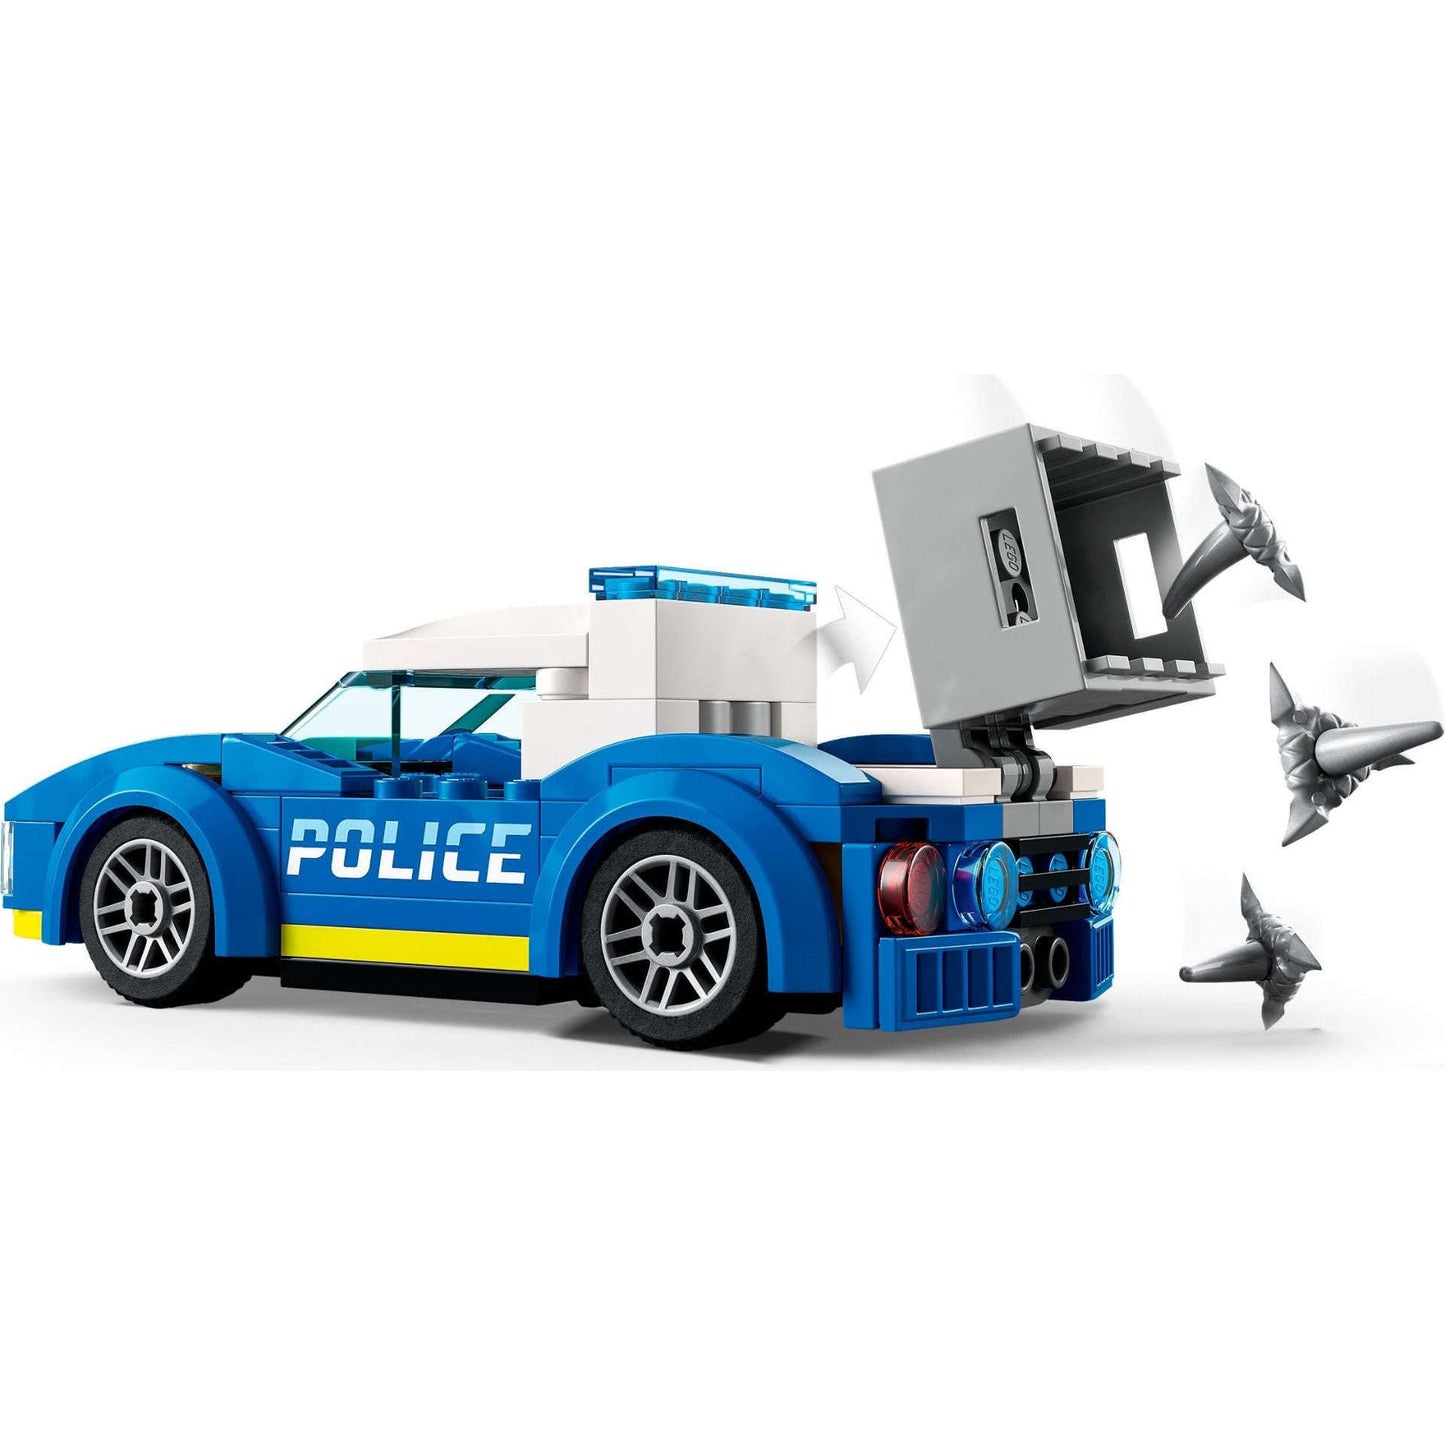 Lego 60314 City Ice Cream Truck Police Chase